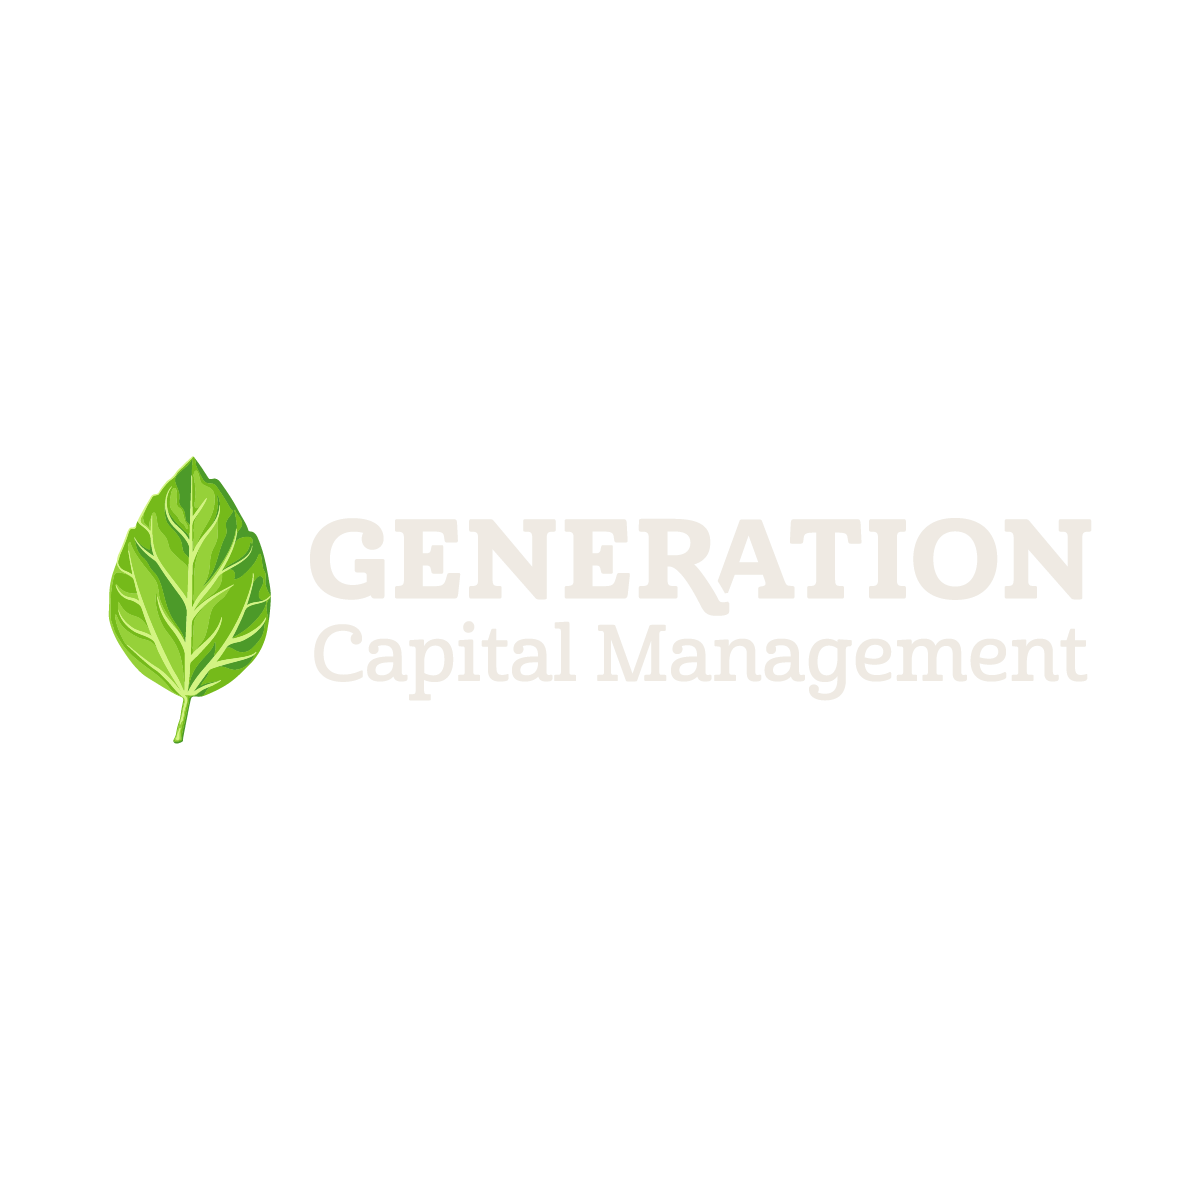 Generation Capital Management, LLC